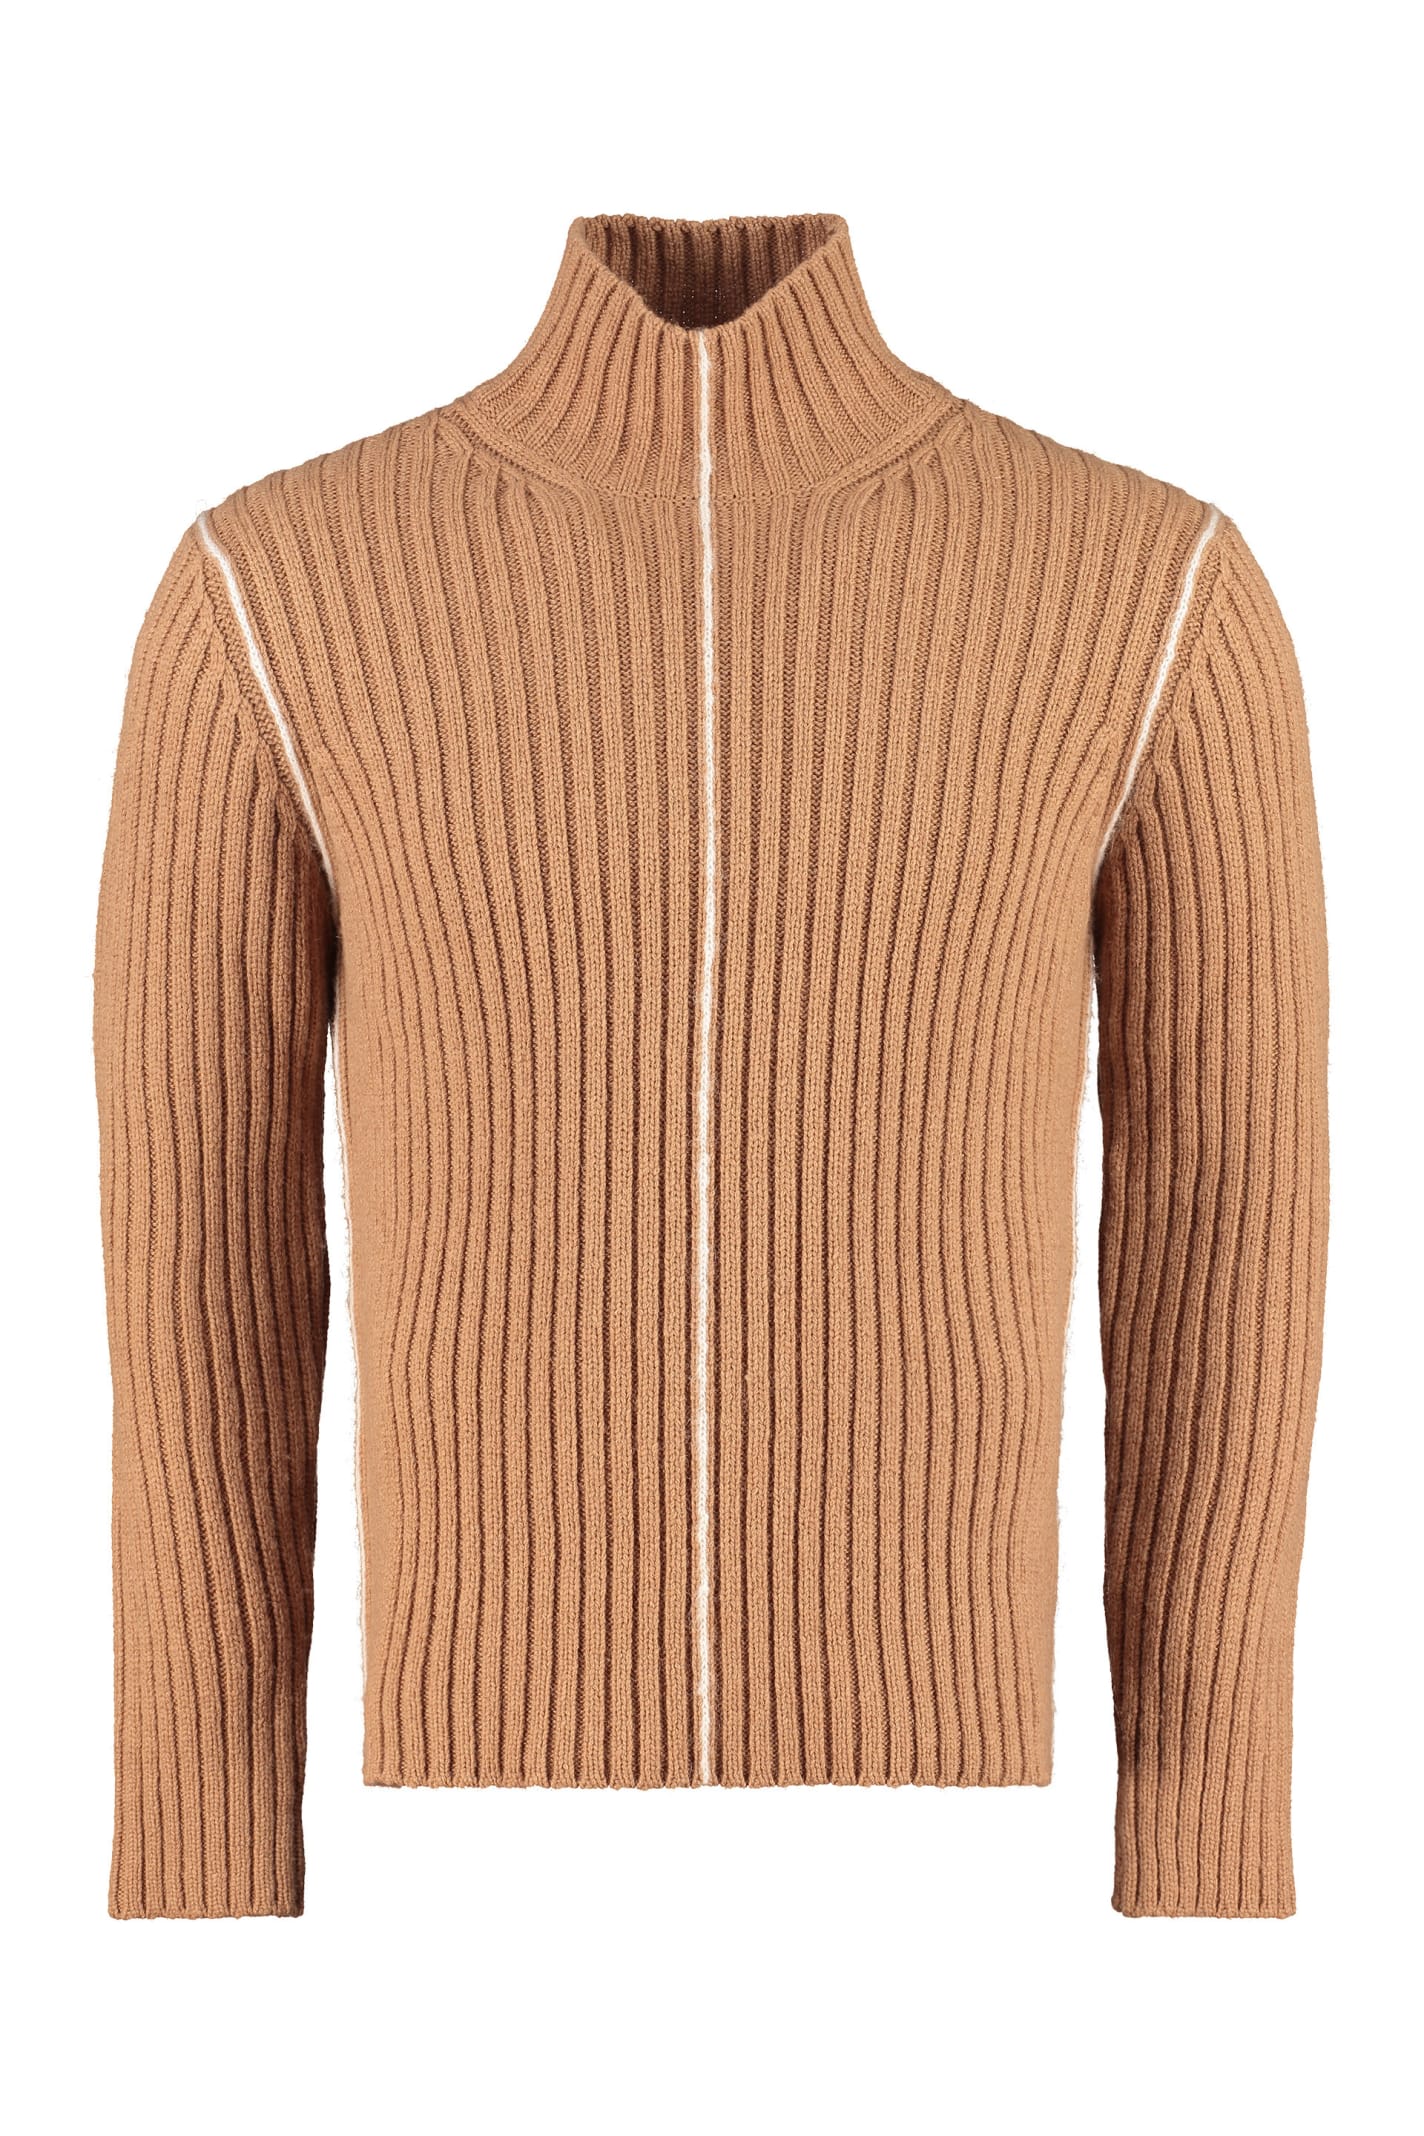 Salvatore Ferragamo Ribbed Turtleneck Sweater